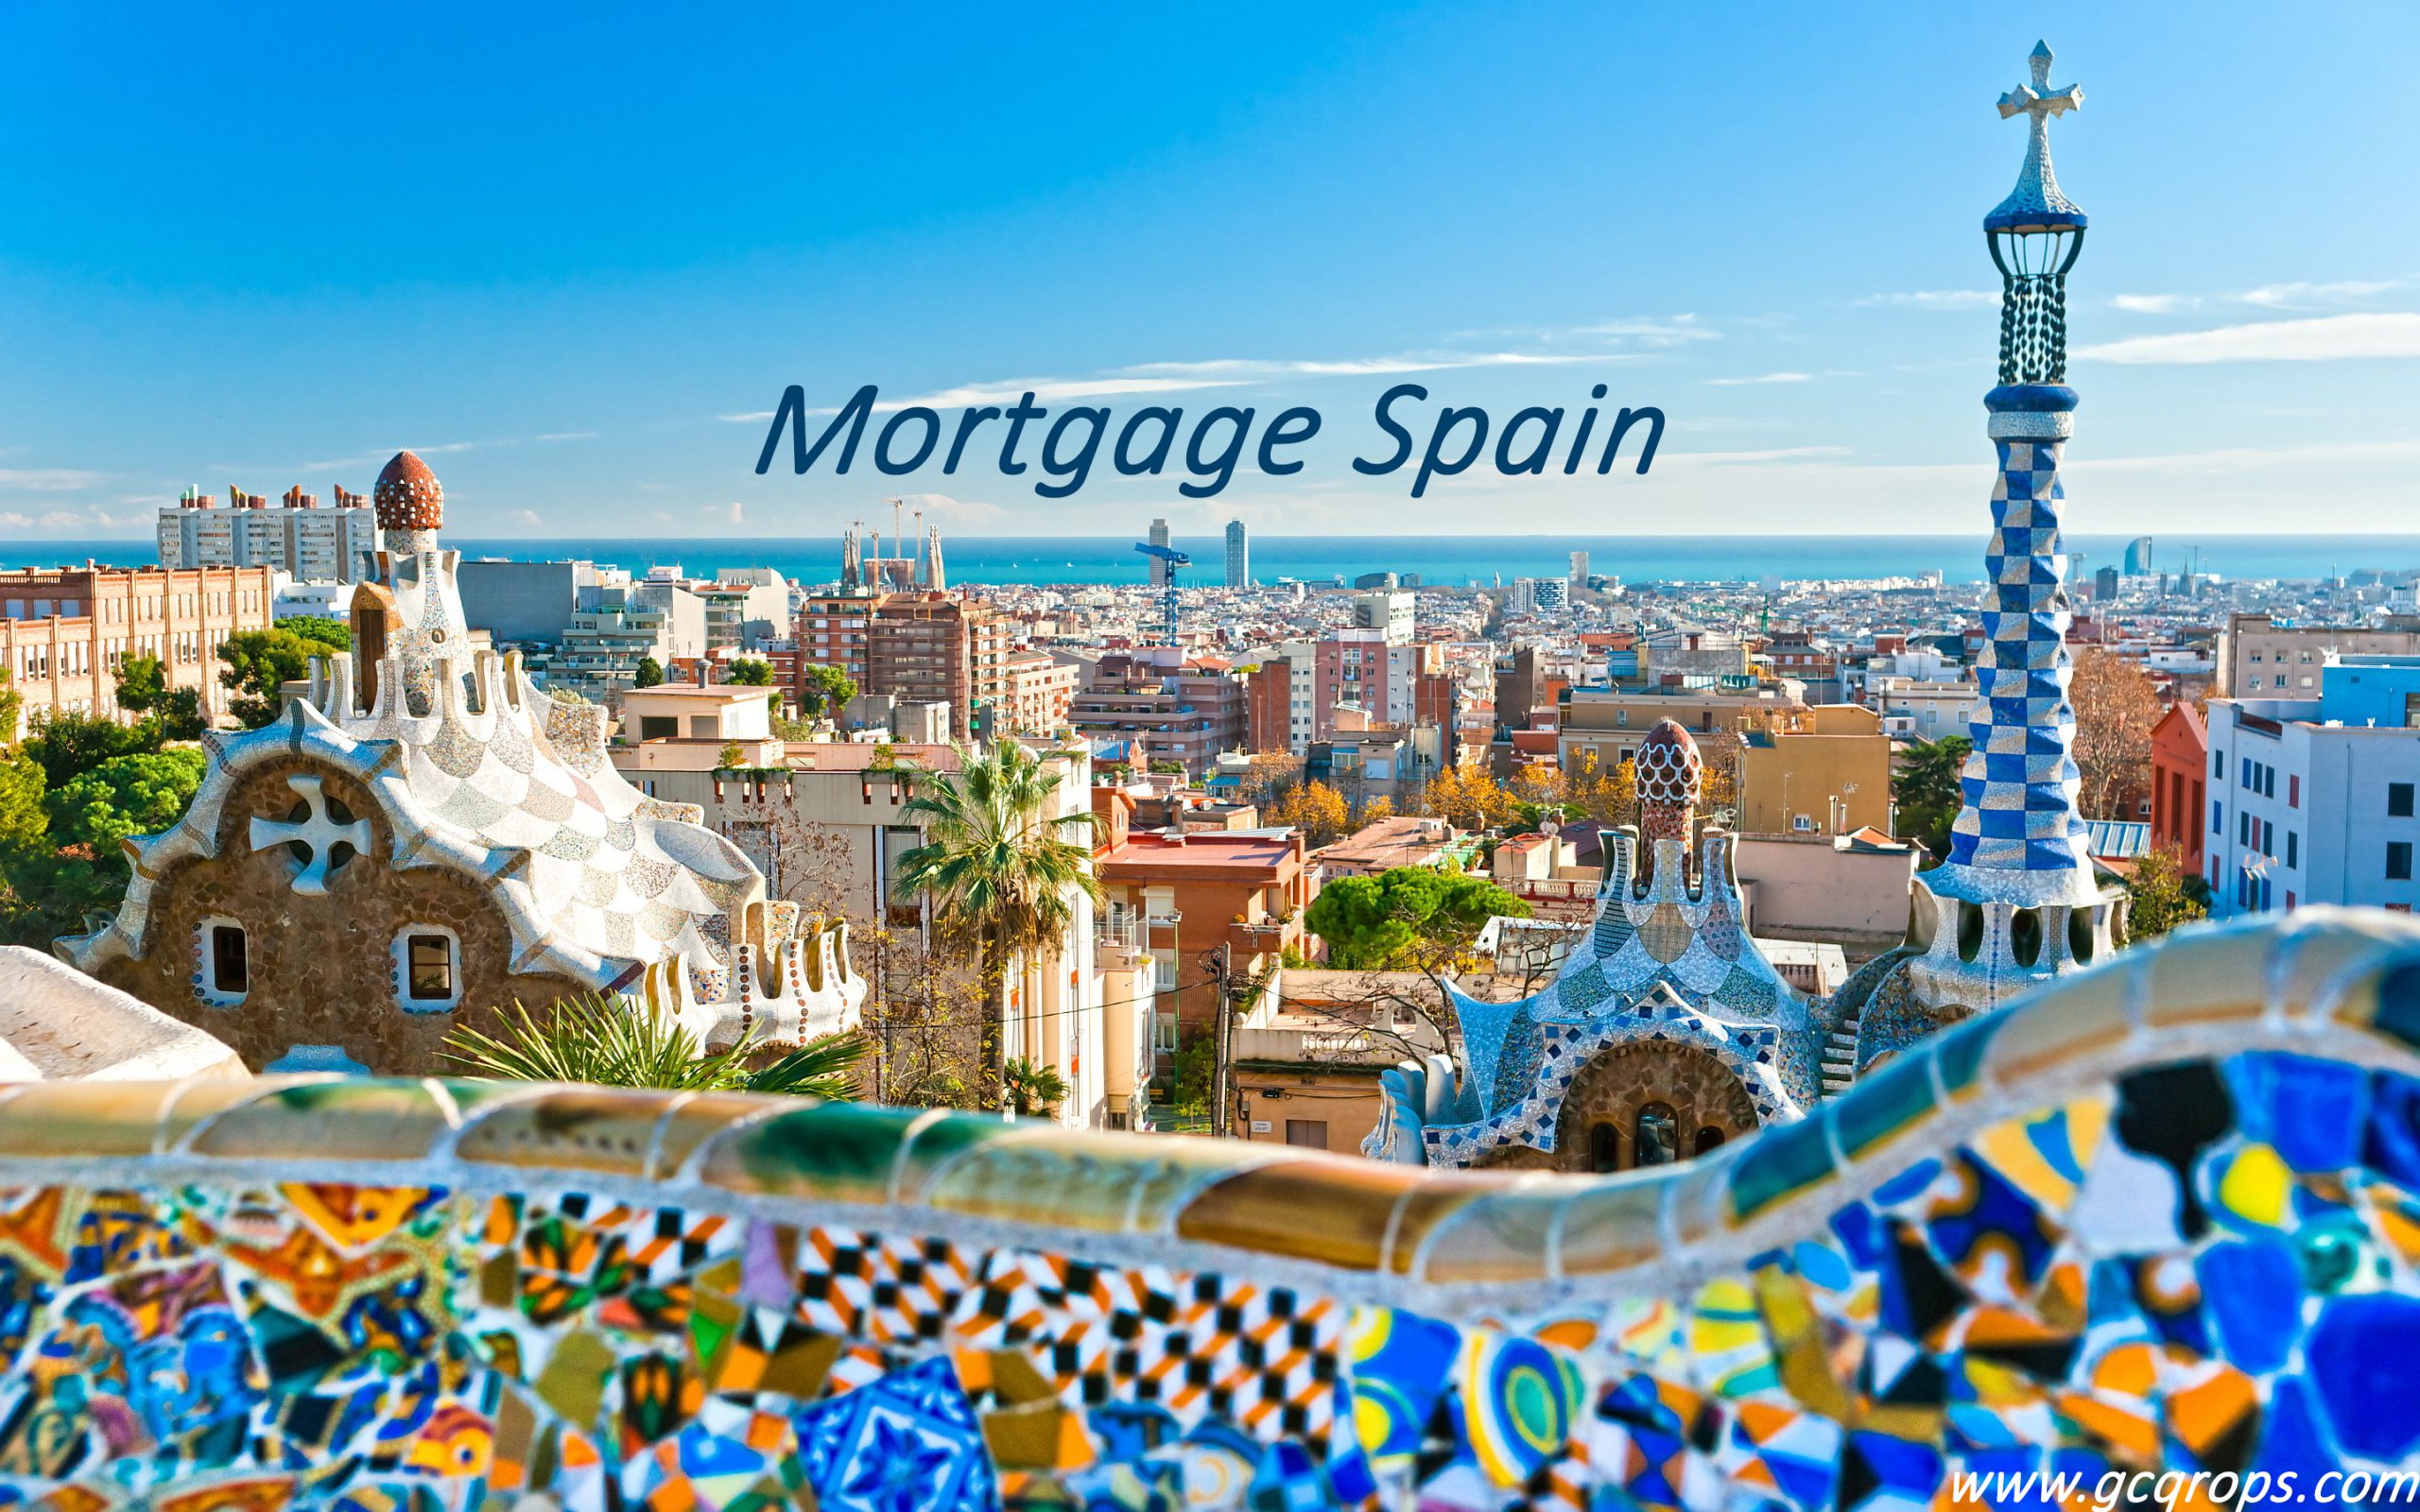 Mortgage Spain